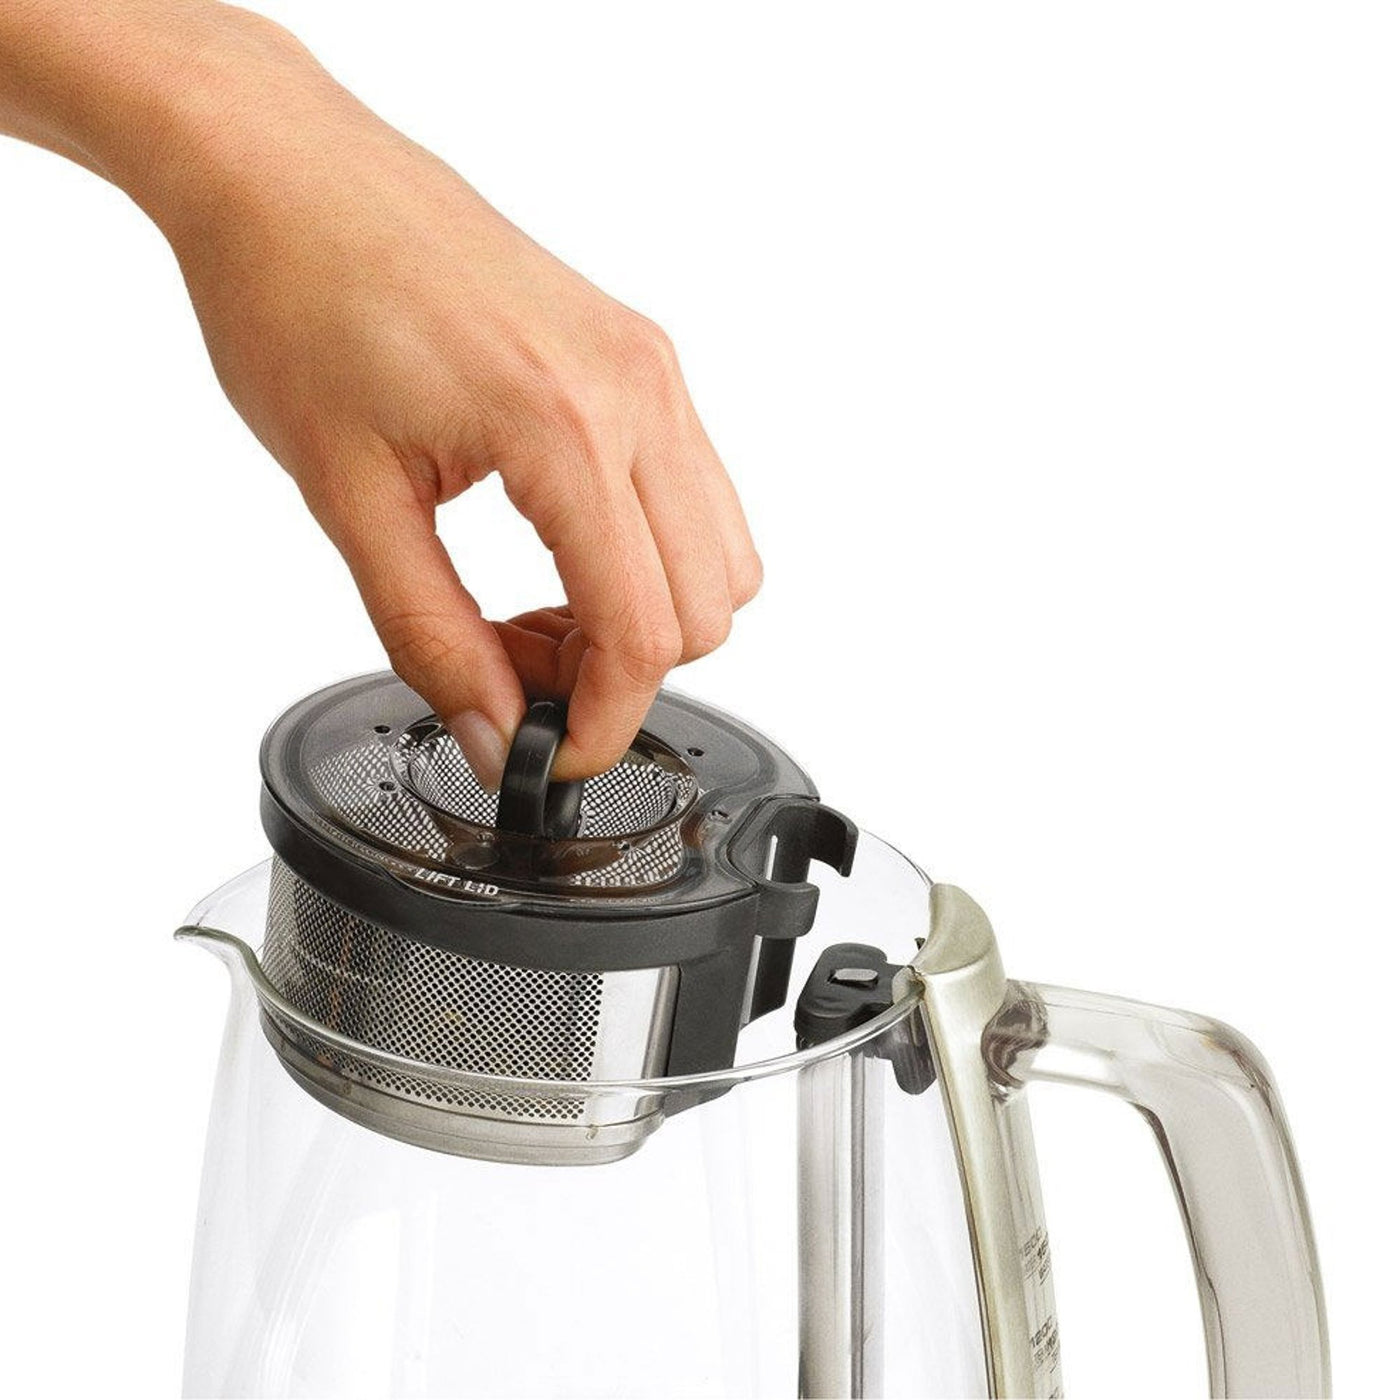 Sage kettle, the Smart Tea Infuser Compact, STM500